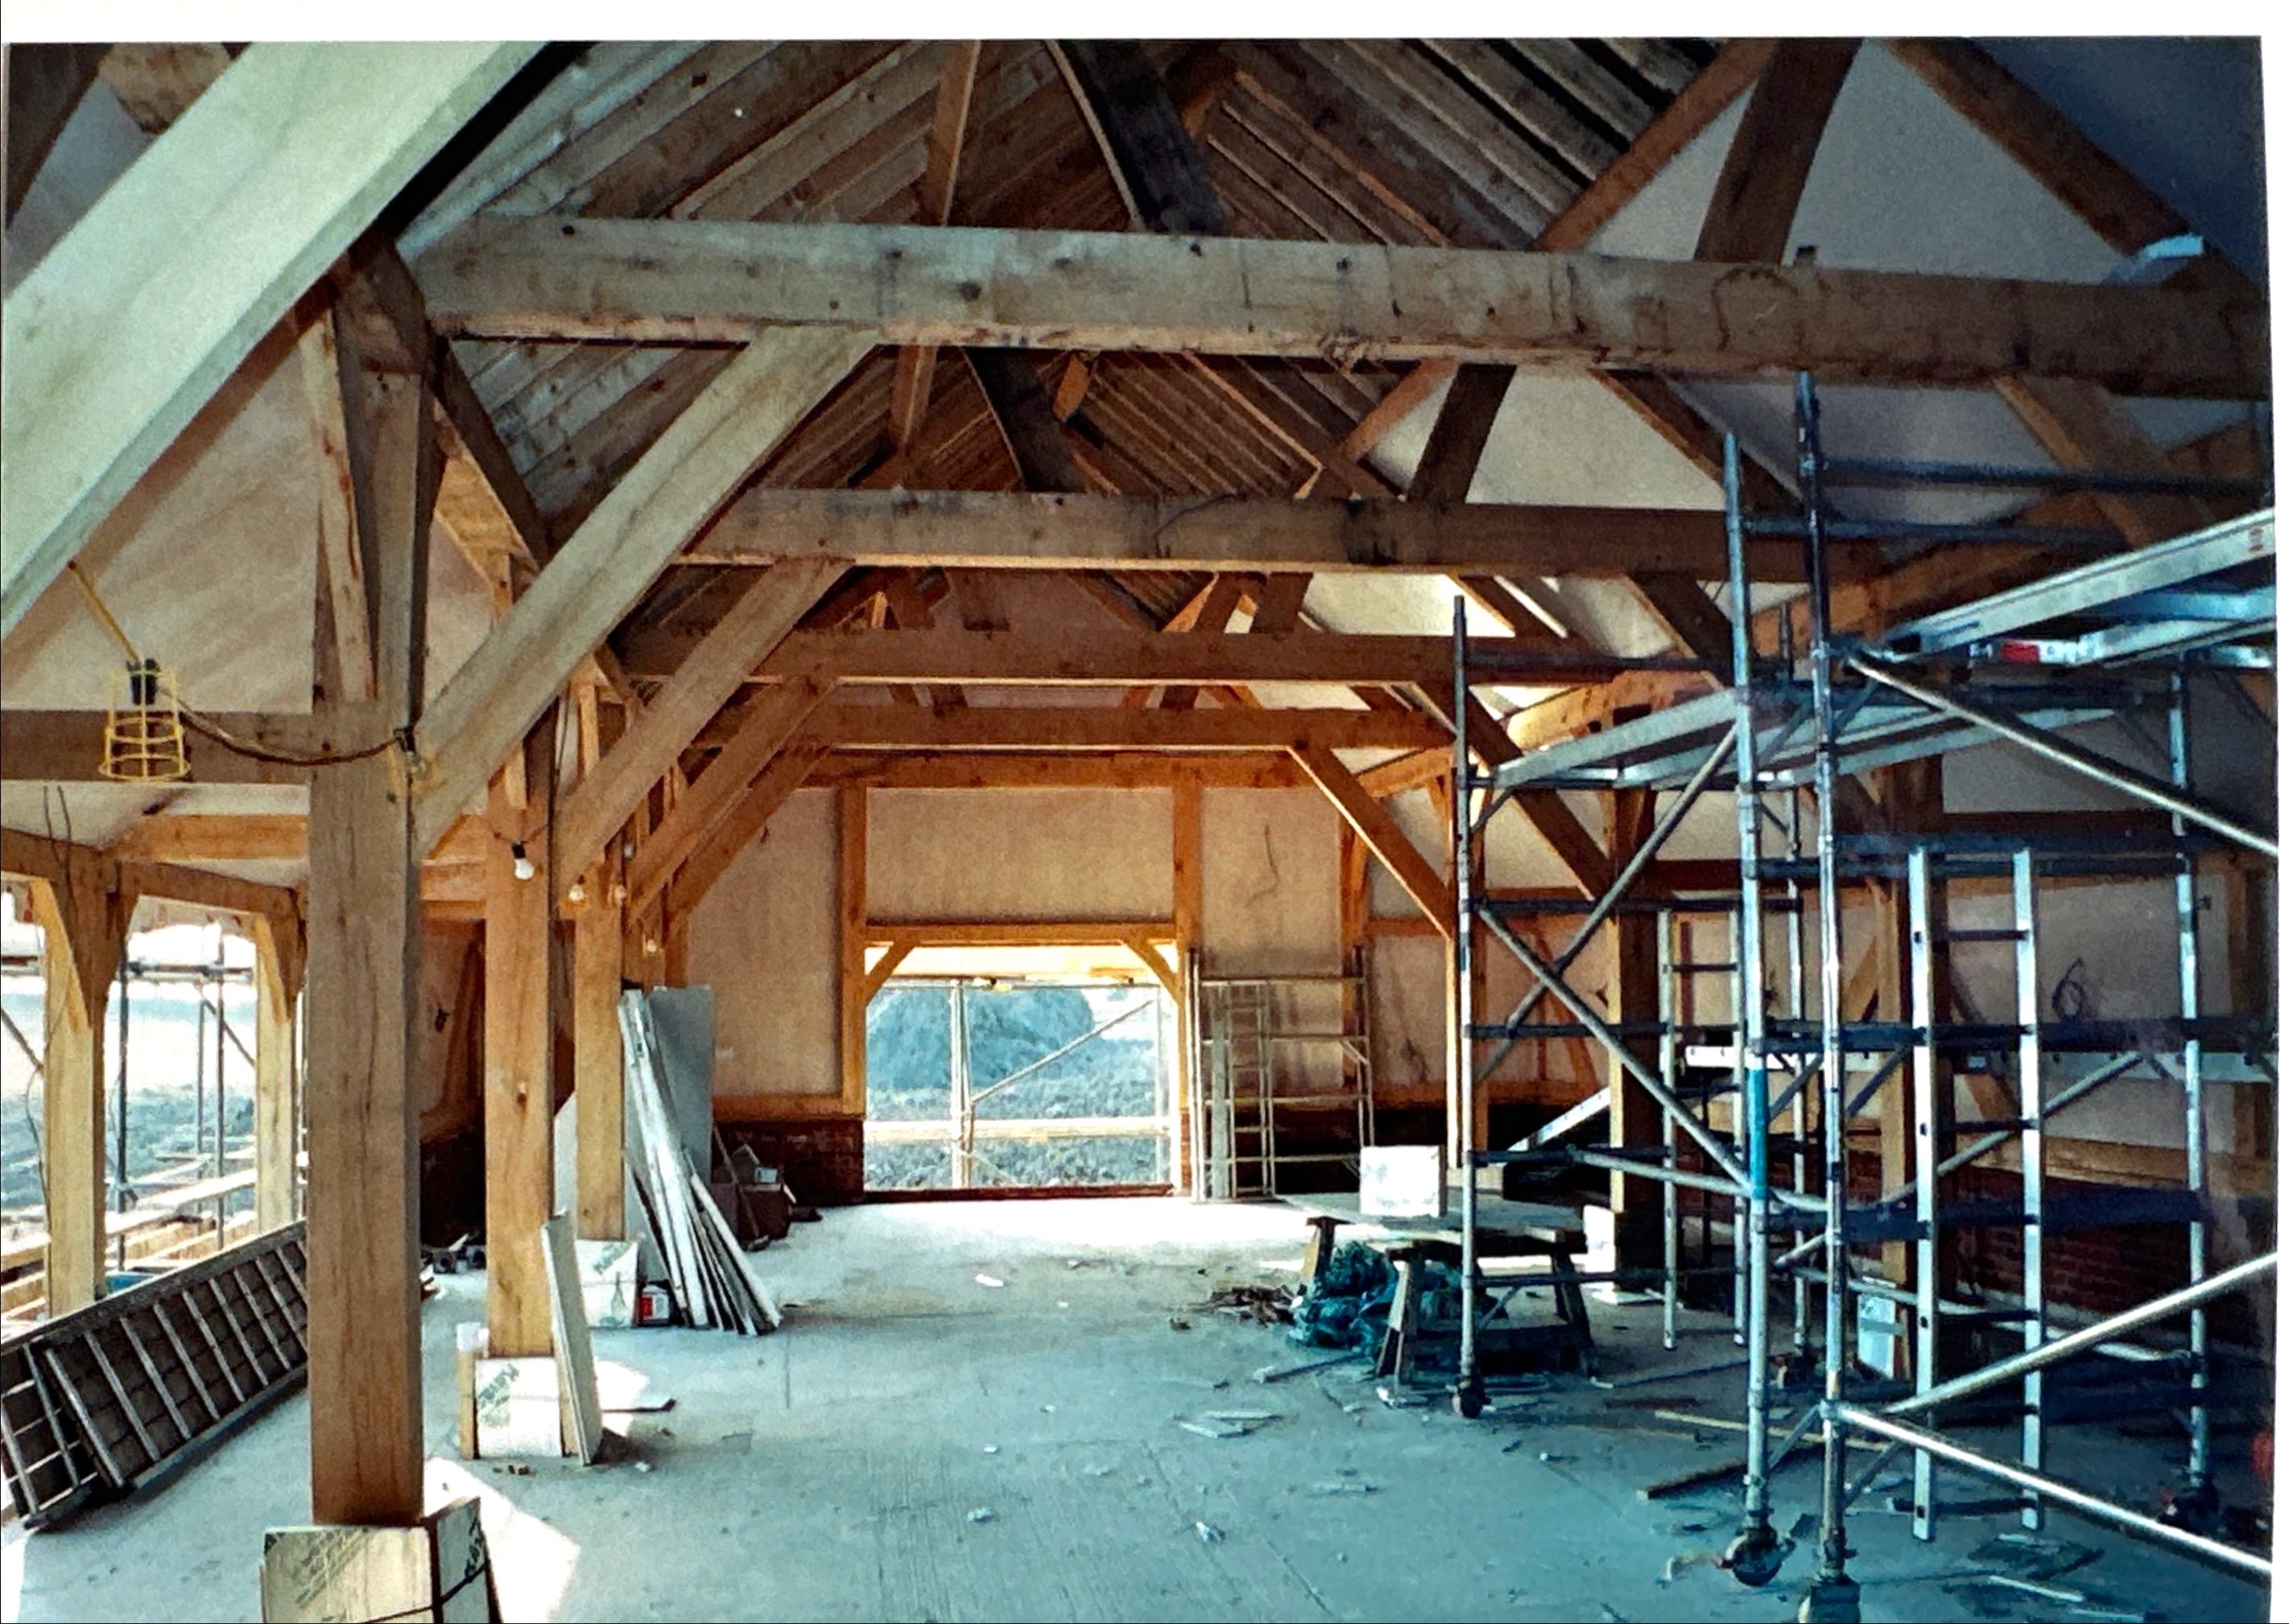 Sandhole Oak Barn wedding venue in Cheshire under construction 